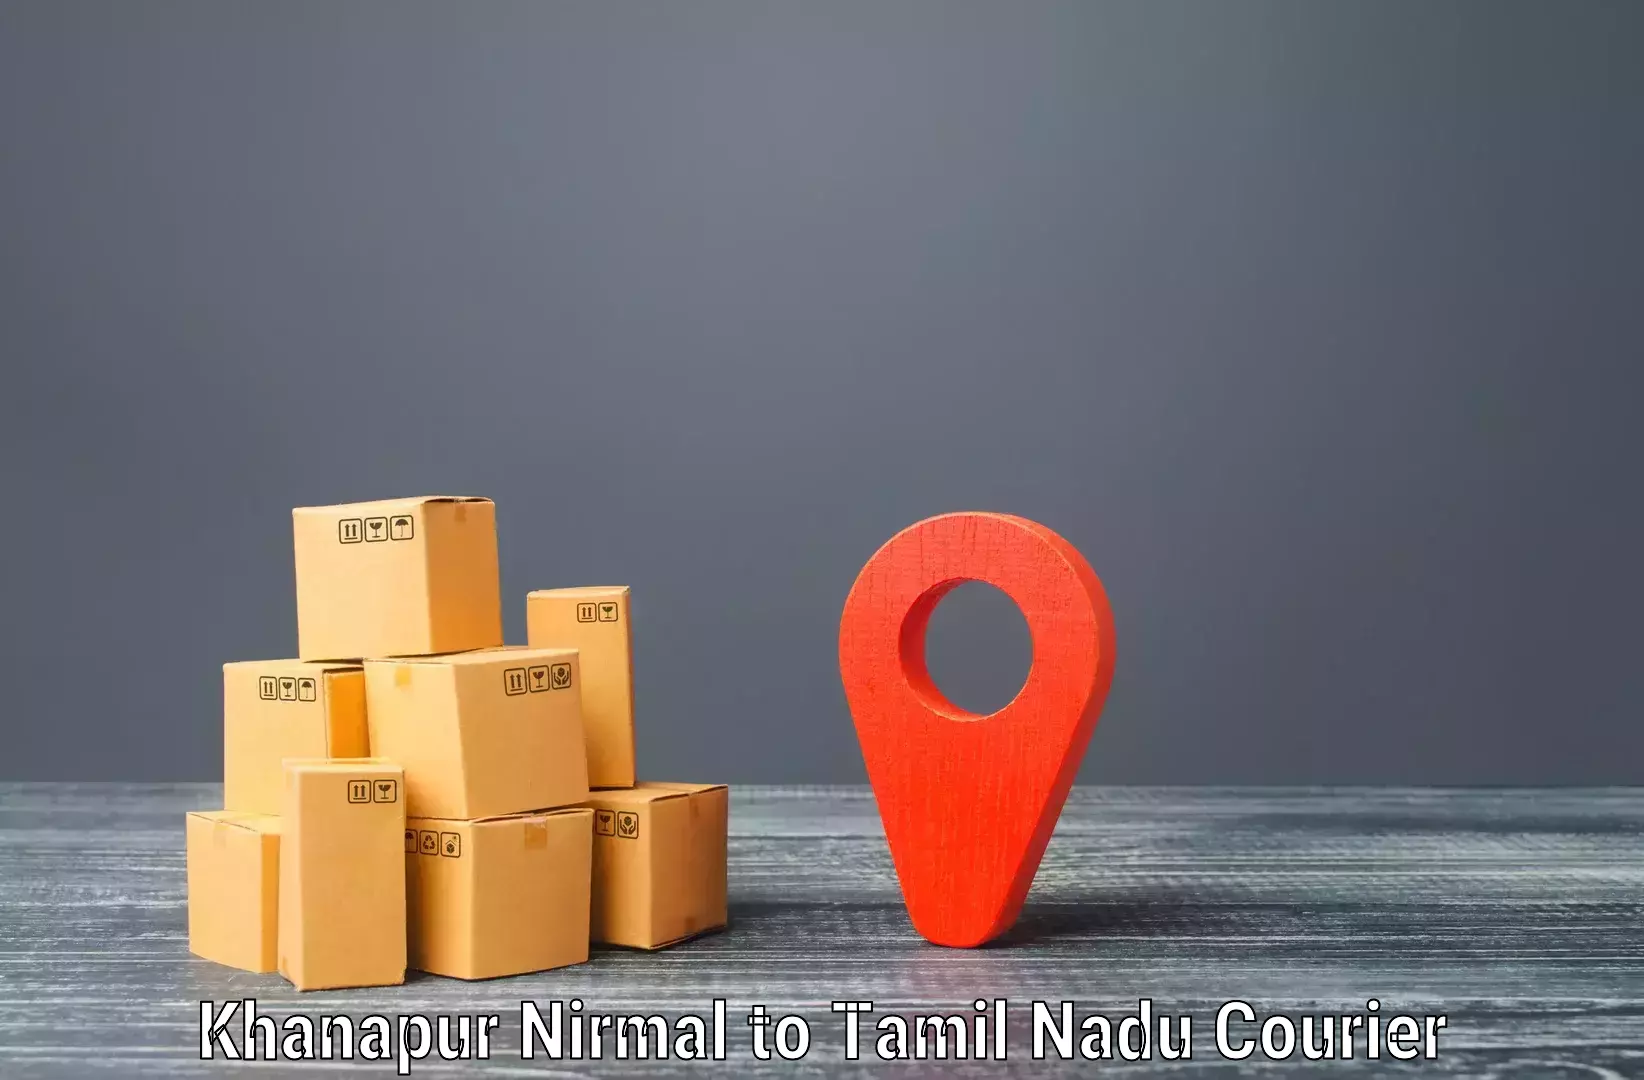 Ground shipping Khanapur Nirmal to Sri Ramachandra Institute of Higher Education and Research Chennai